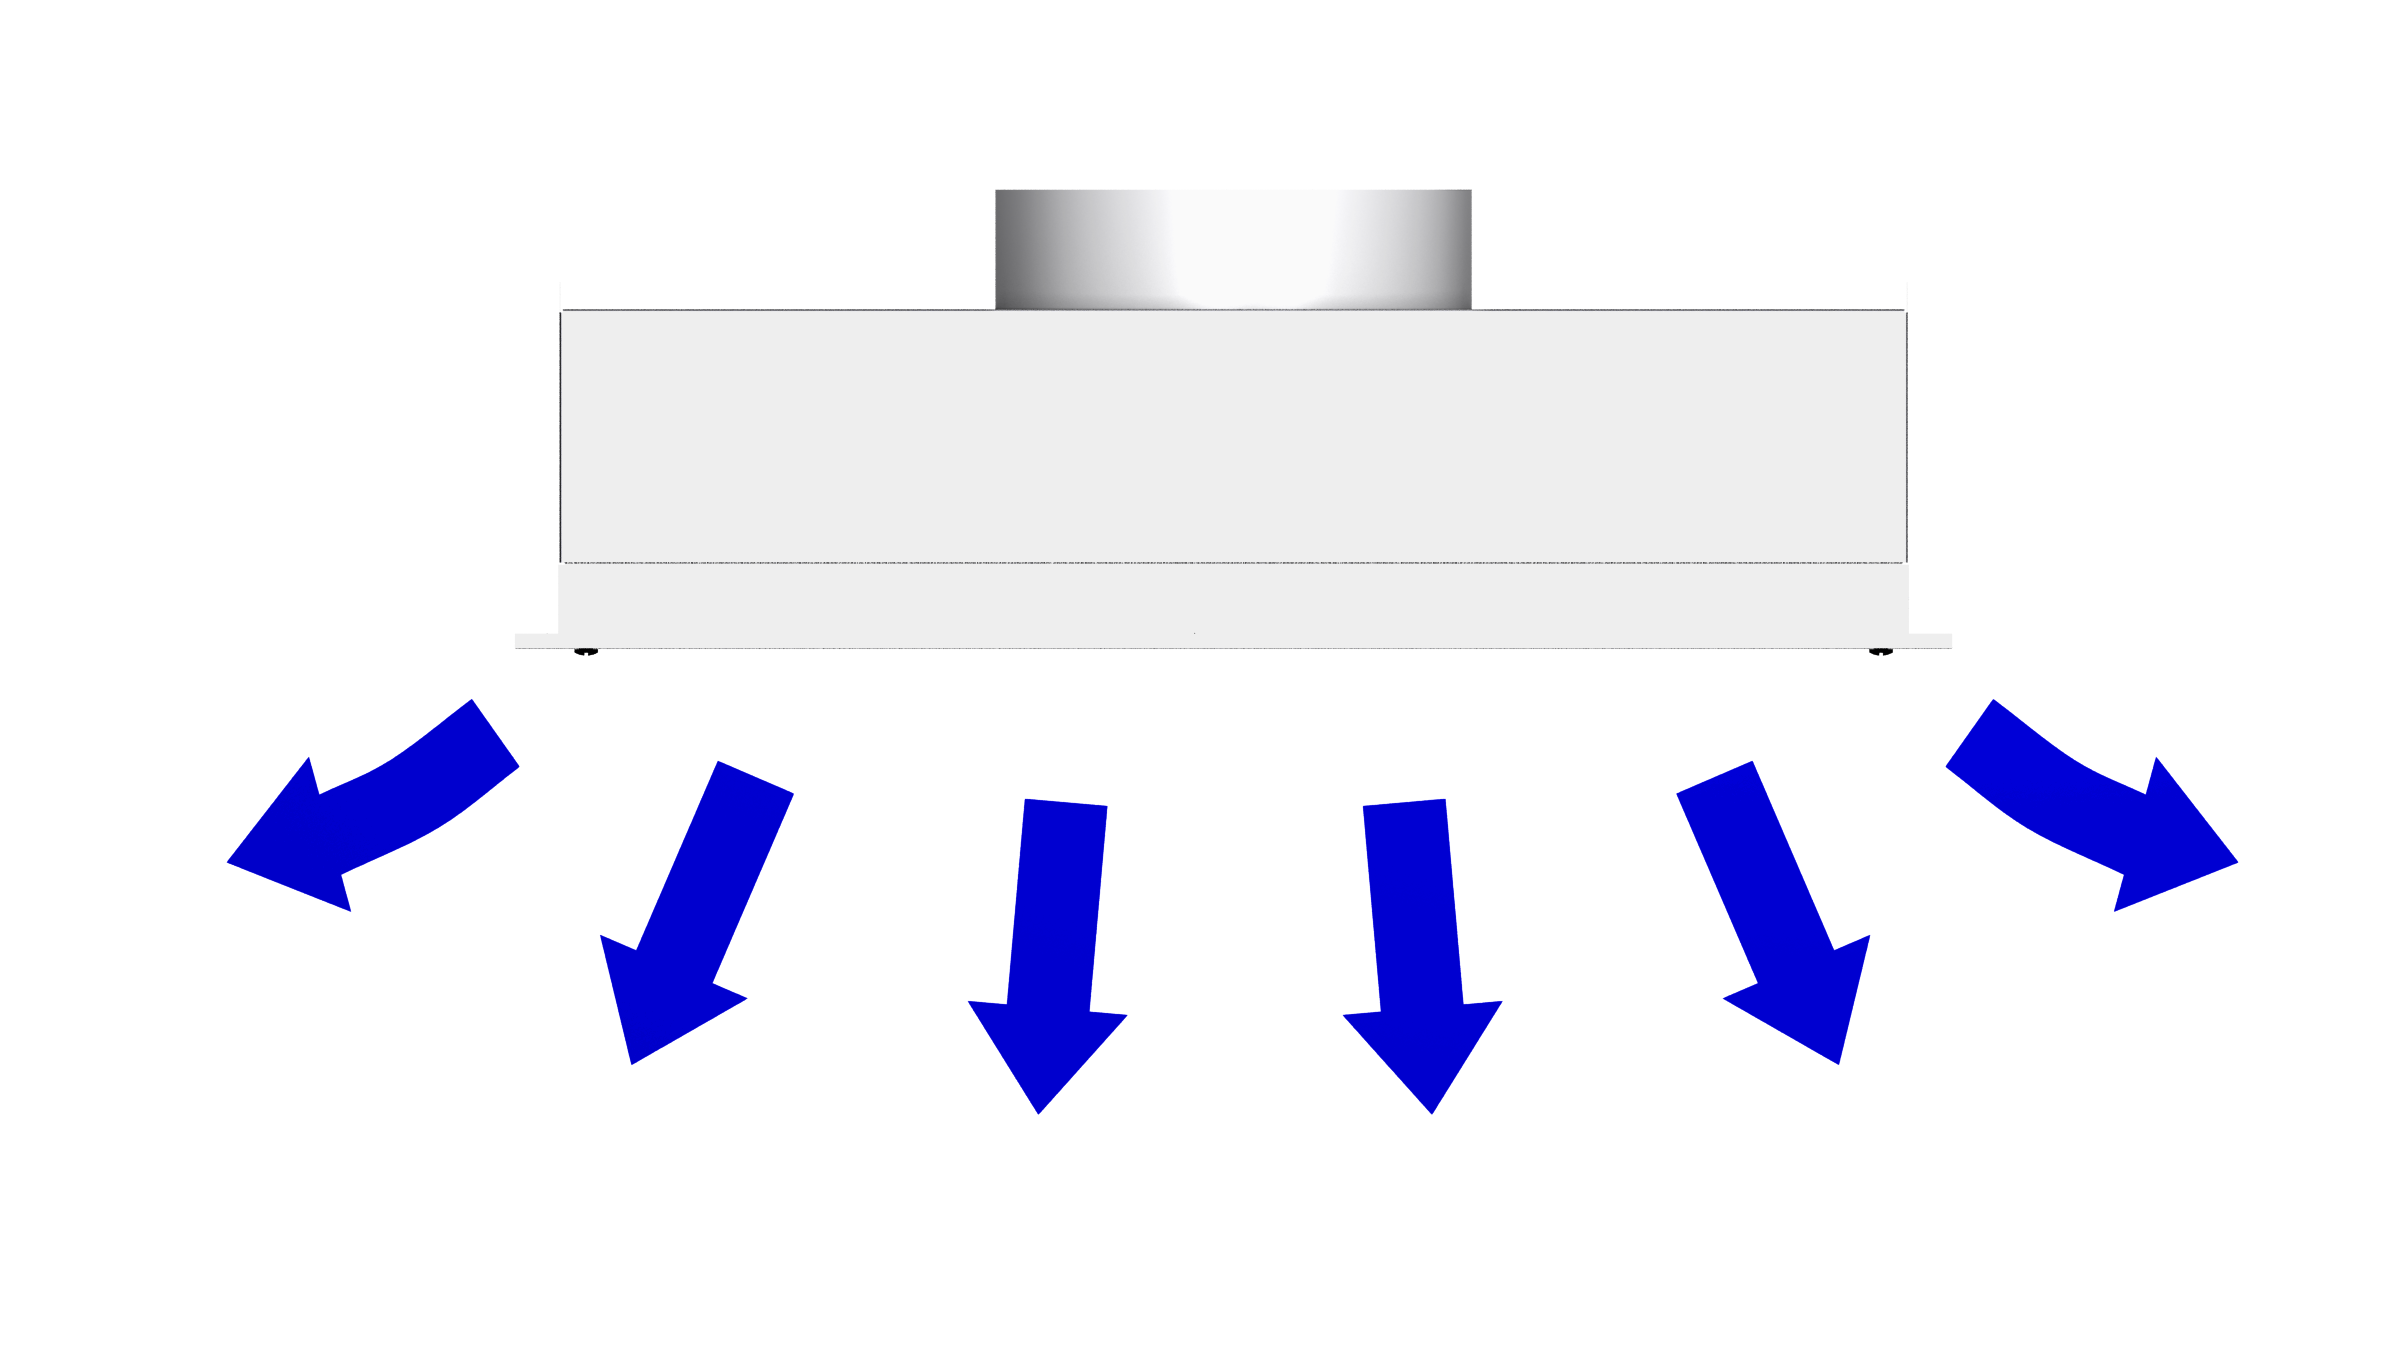 Flush-face radial-flow diffuser